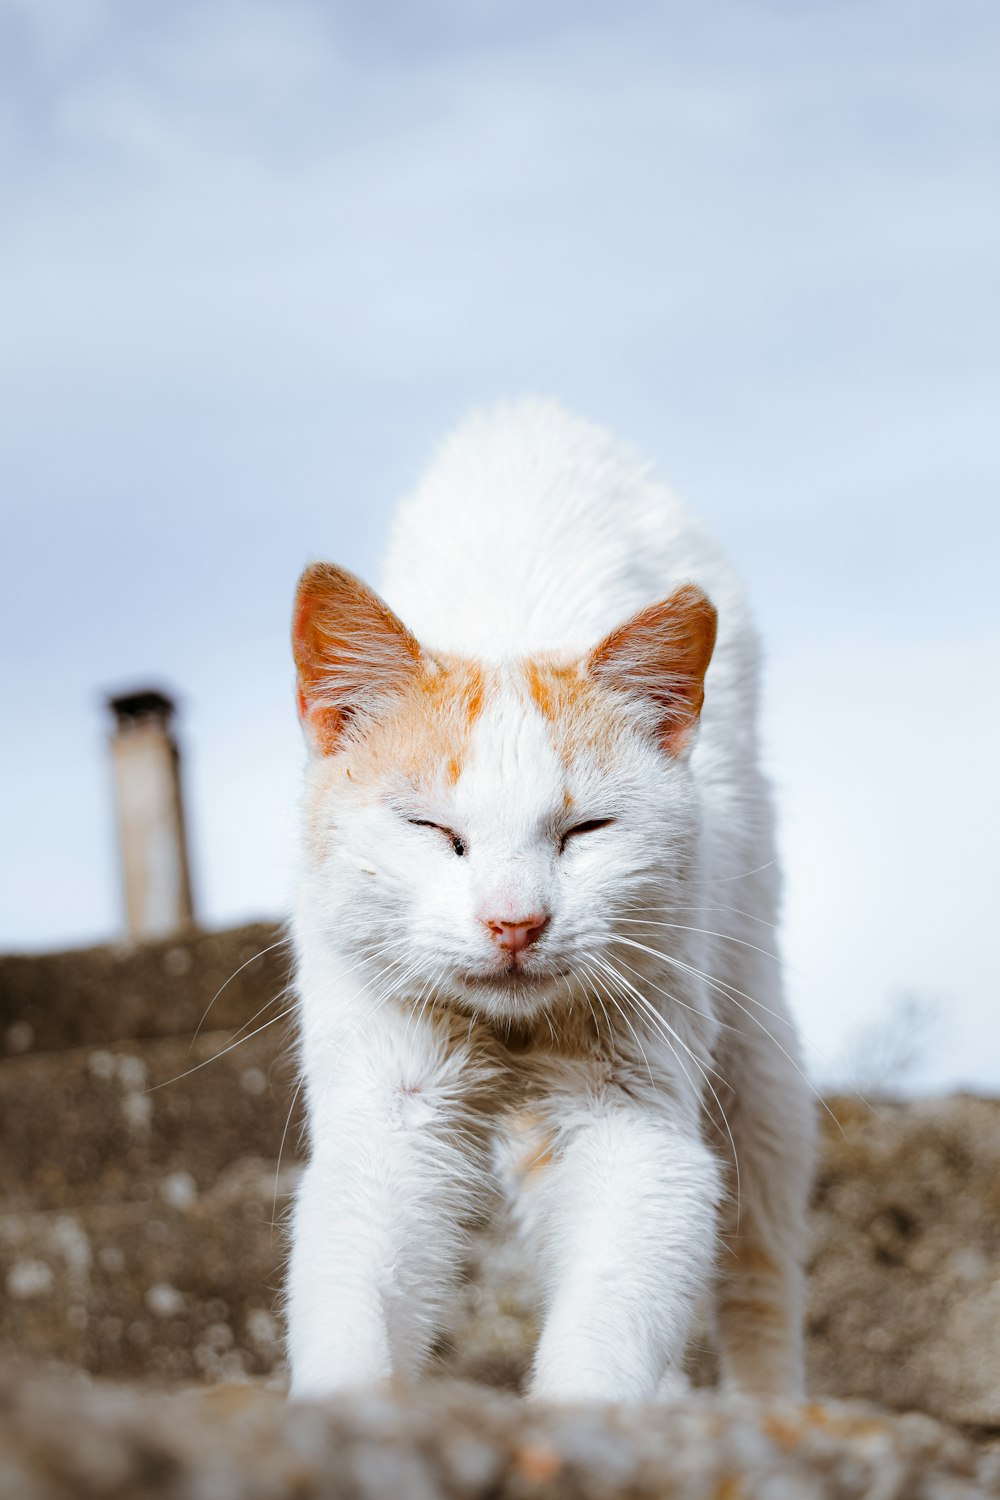 white and orange cat on black concrete surface